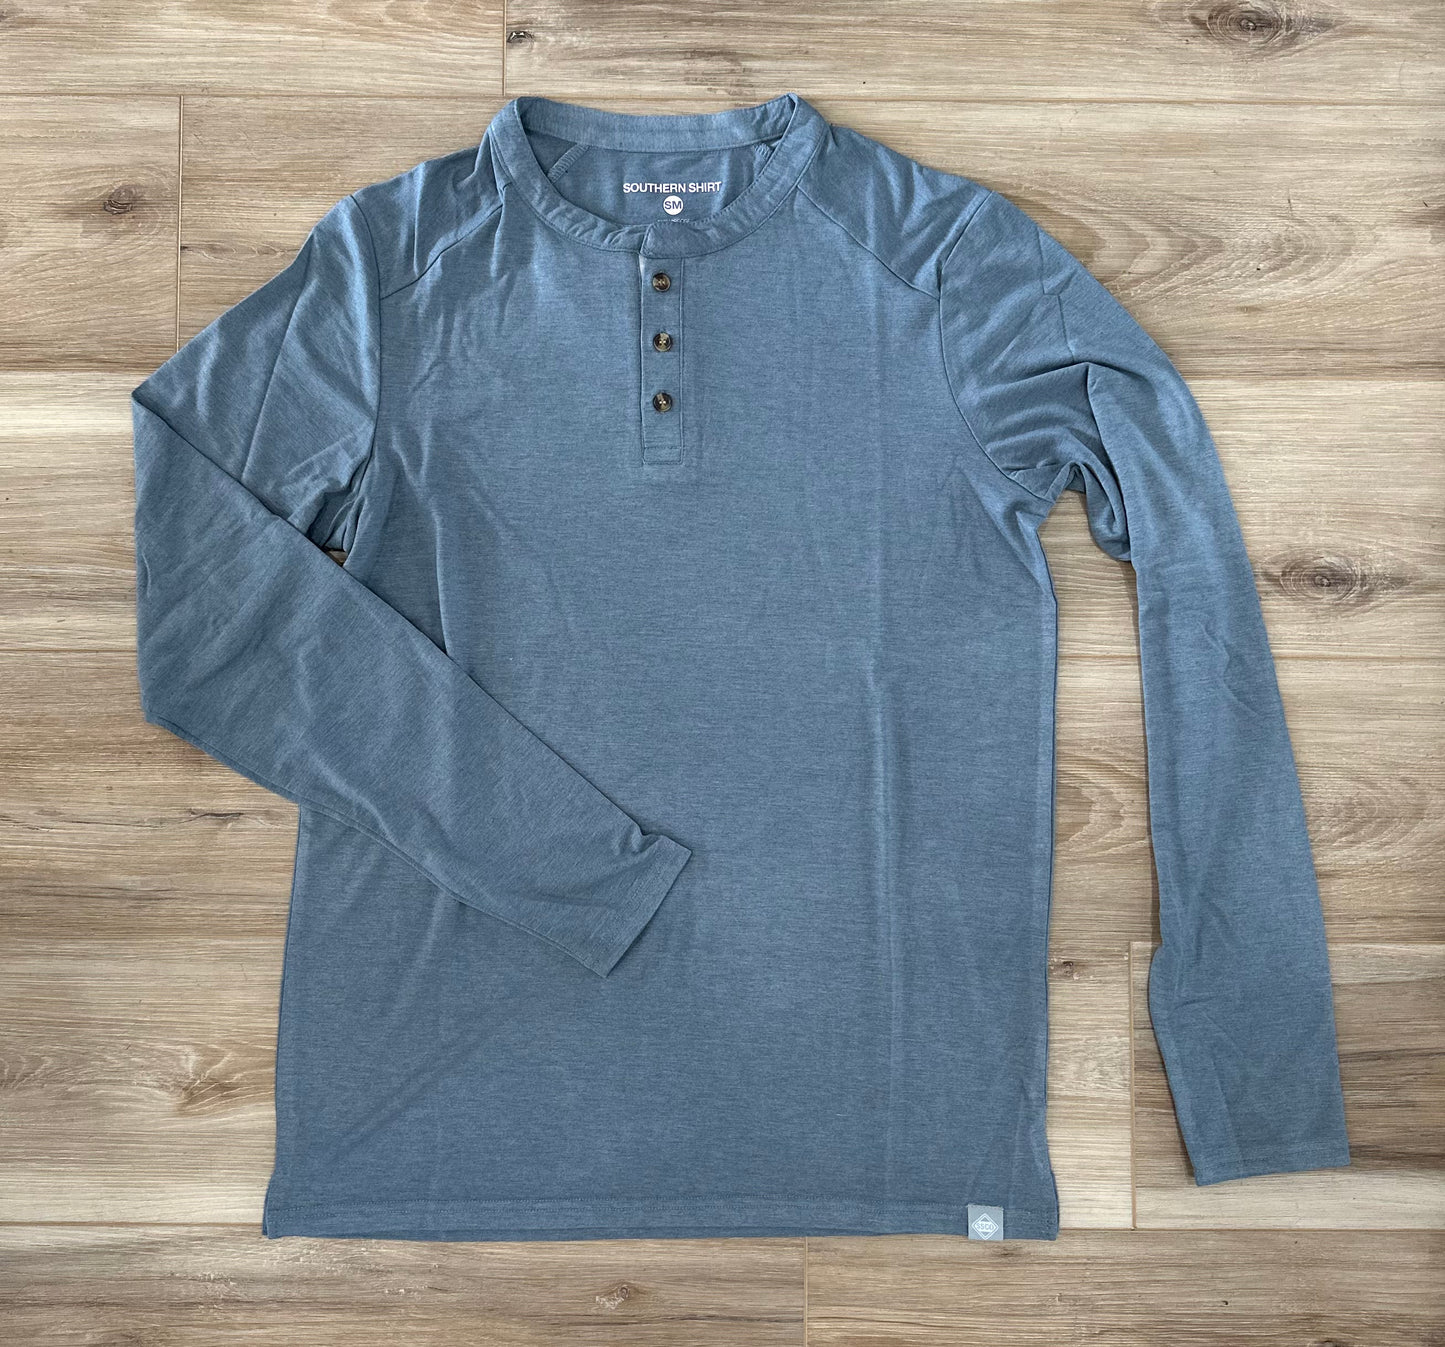 Southern Shirt Co.- Max Comfort Henley LS, Thundercloud